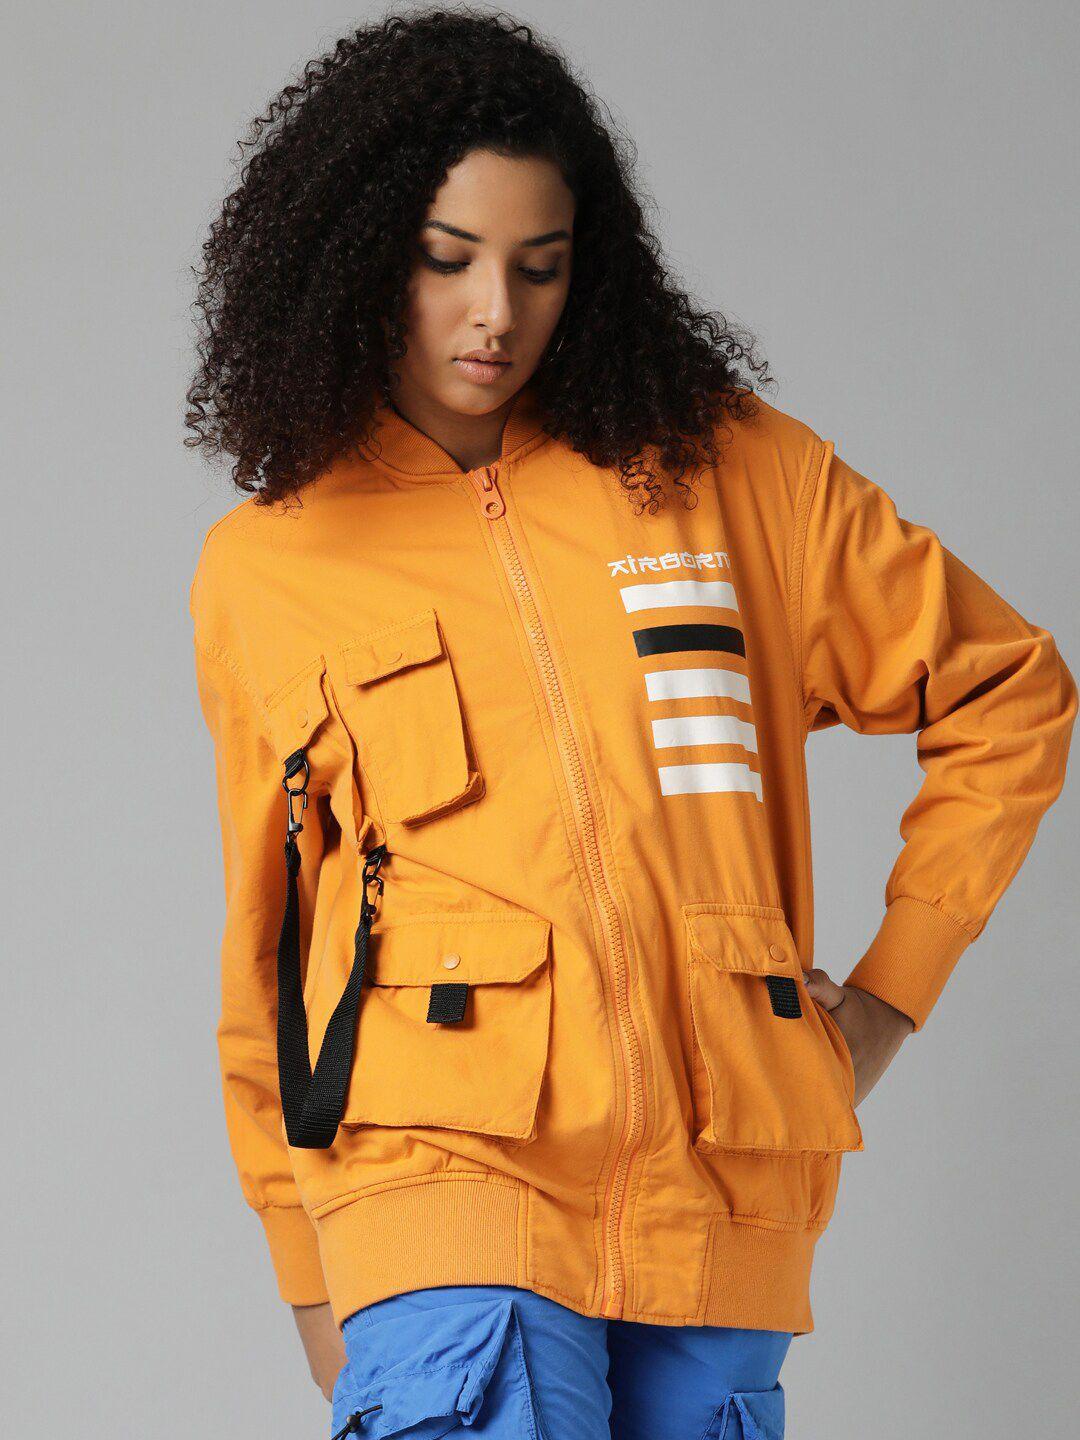 breakbounce orange & white striped cotton tailored jacket